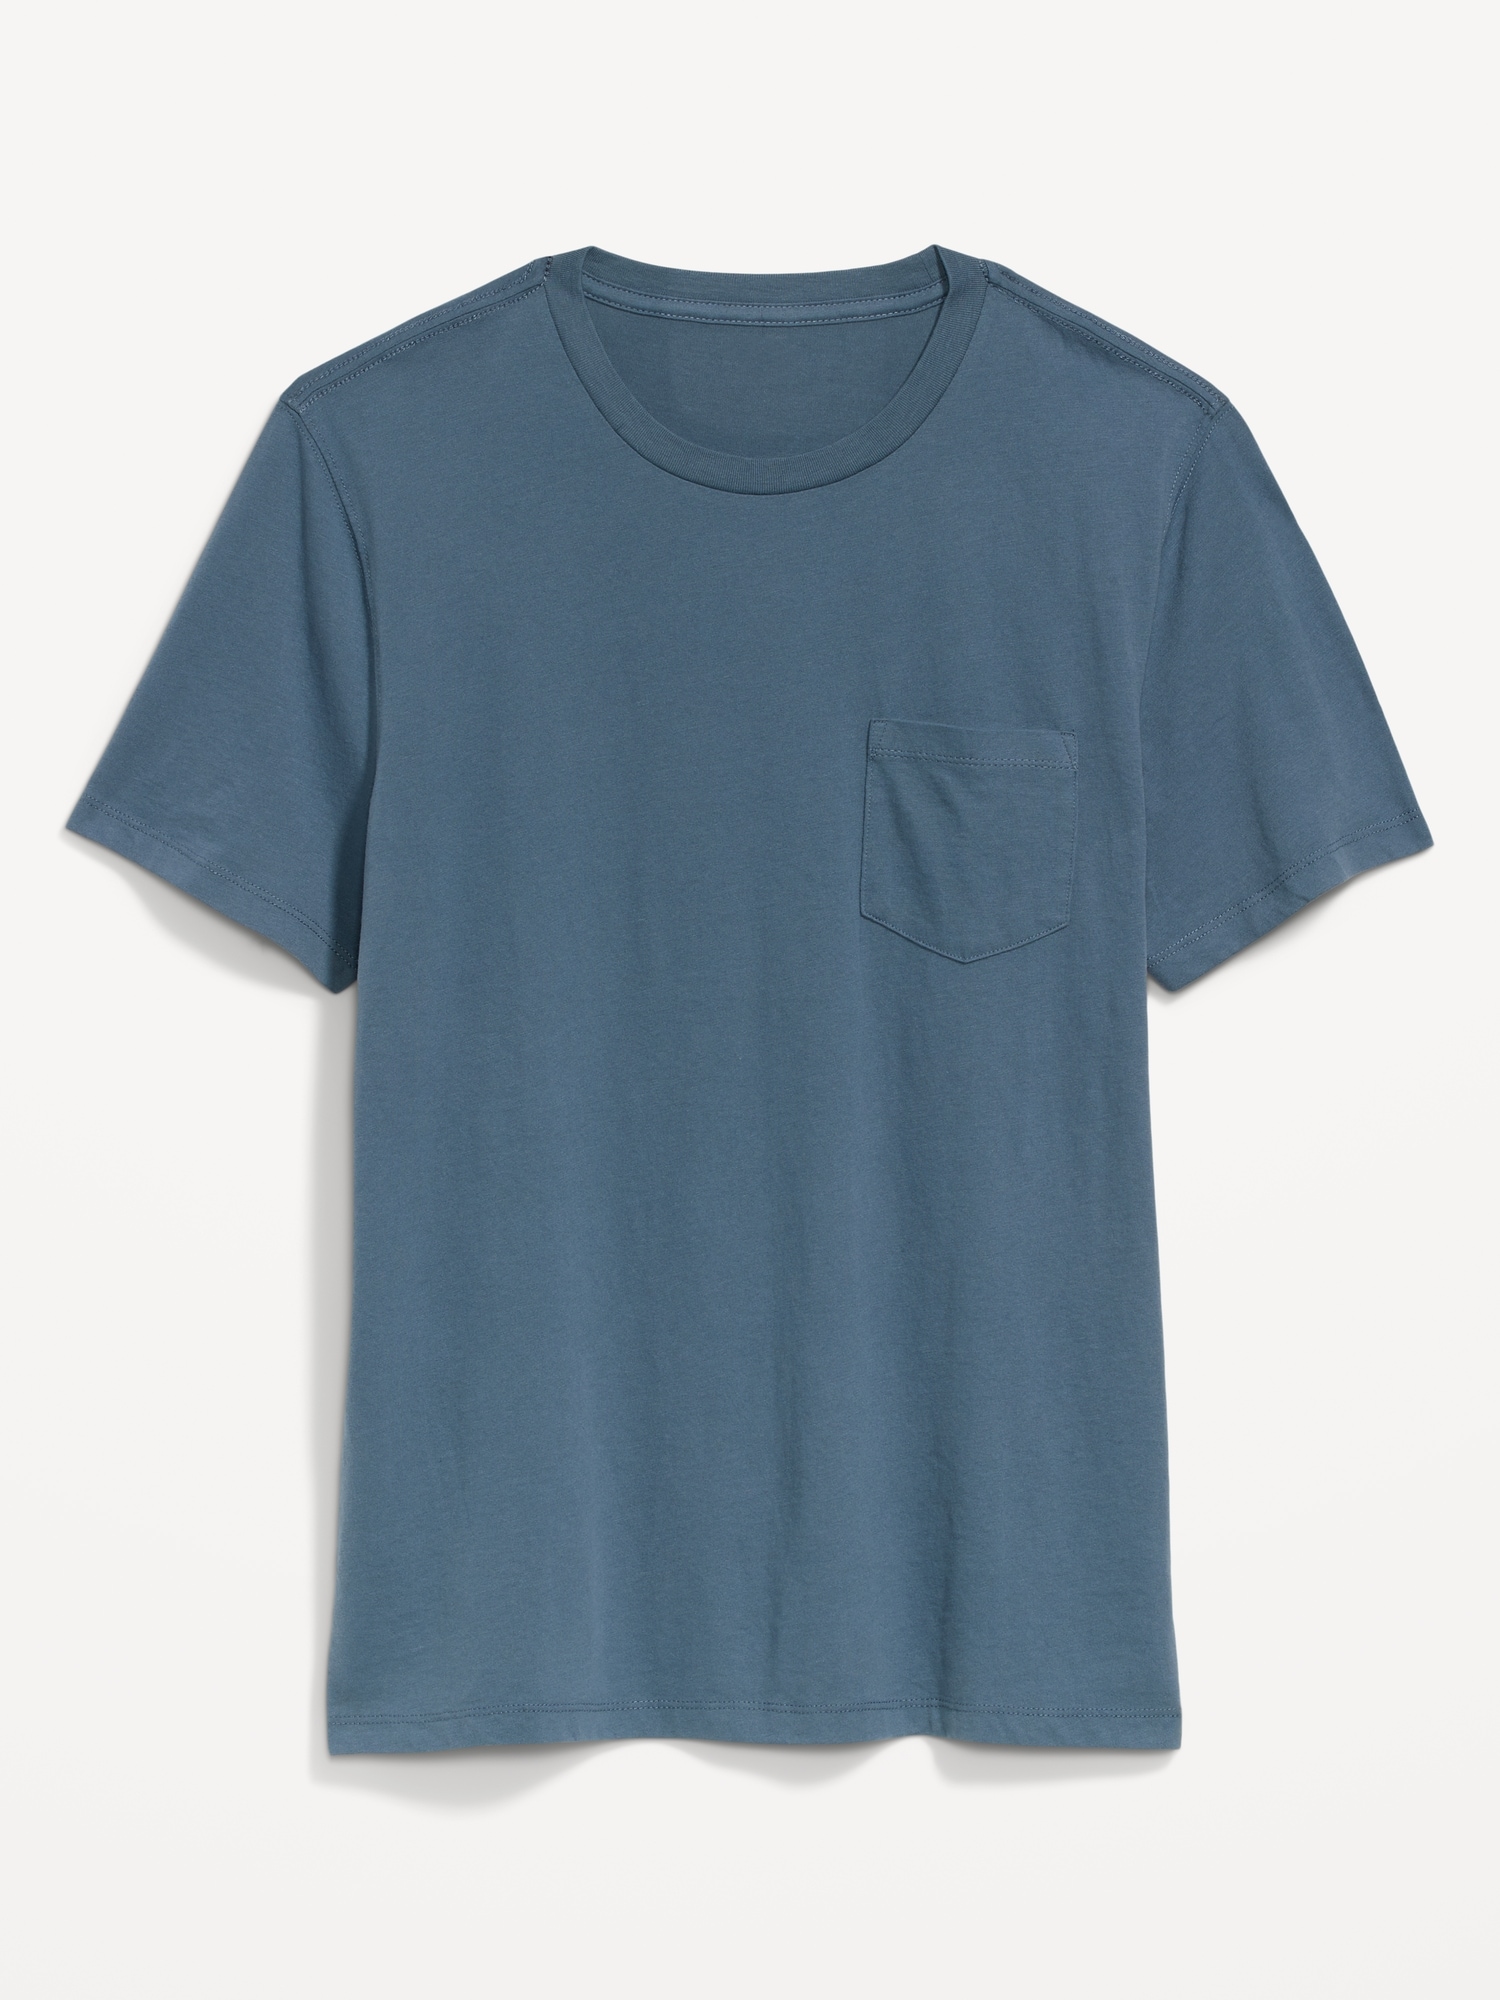 Soft-Washed Chest-Pocket Crew-Neck T-Shirt for Men | Old Navy